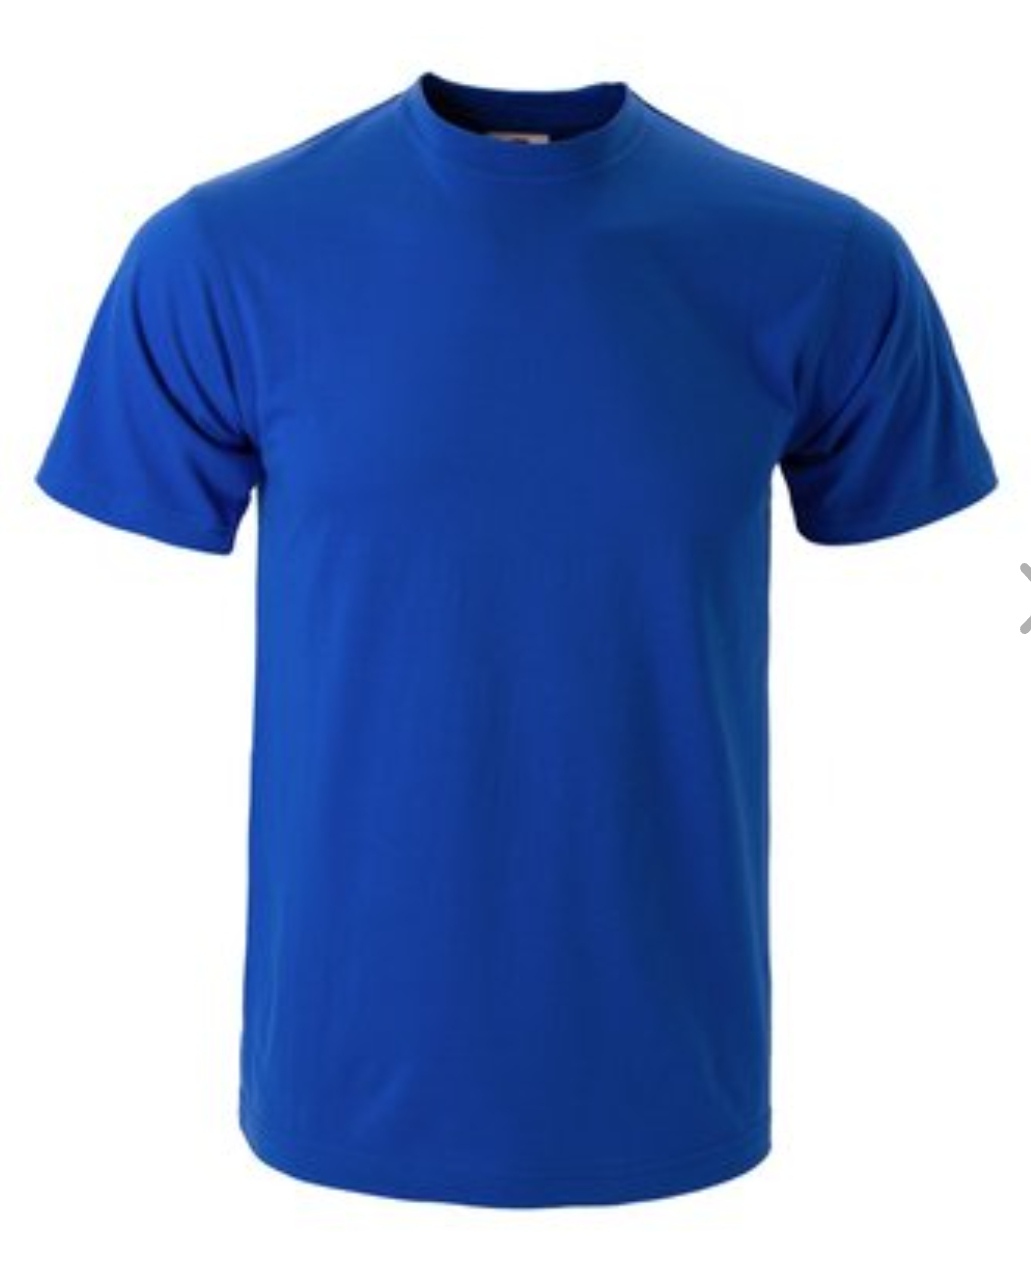 Купить синюю майку. Трисар футболки поло. Футболка мужская Trisar 160. Футболка синяя. Футбол синий.